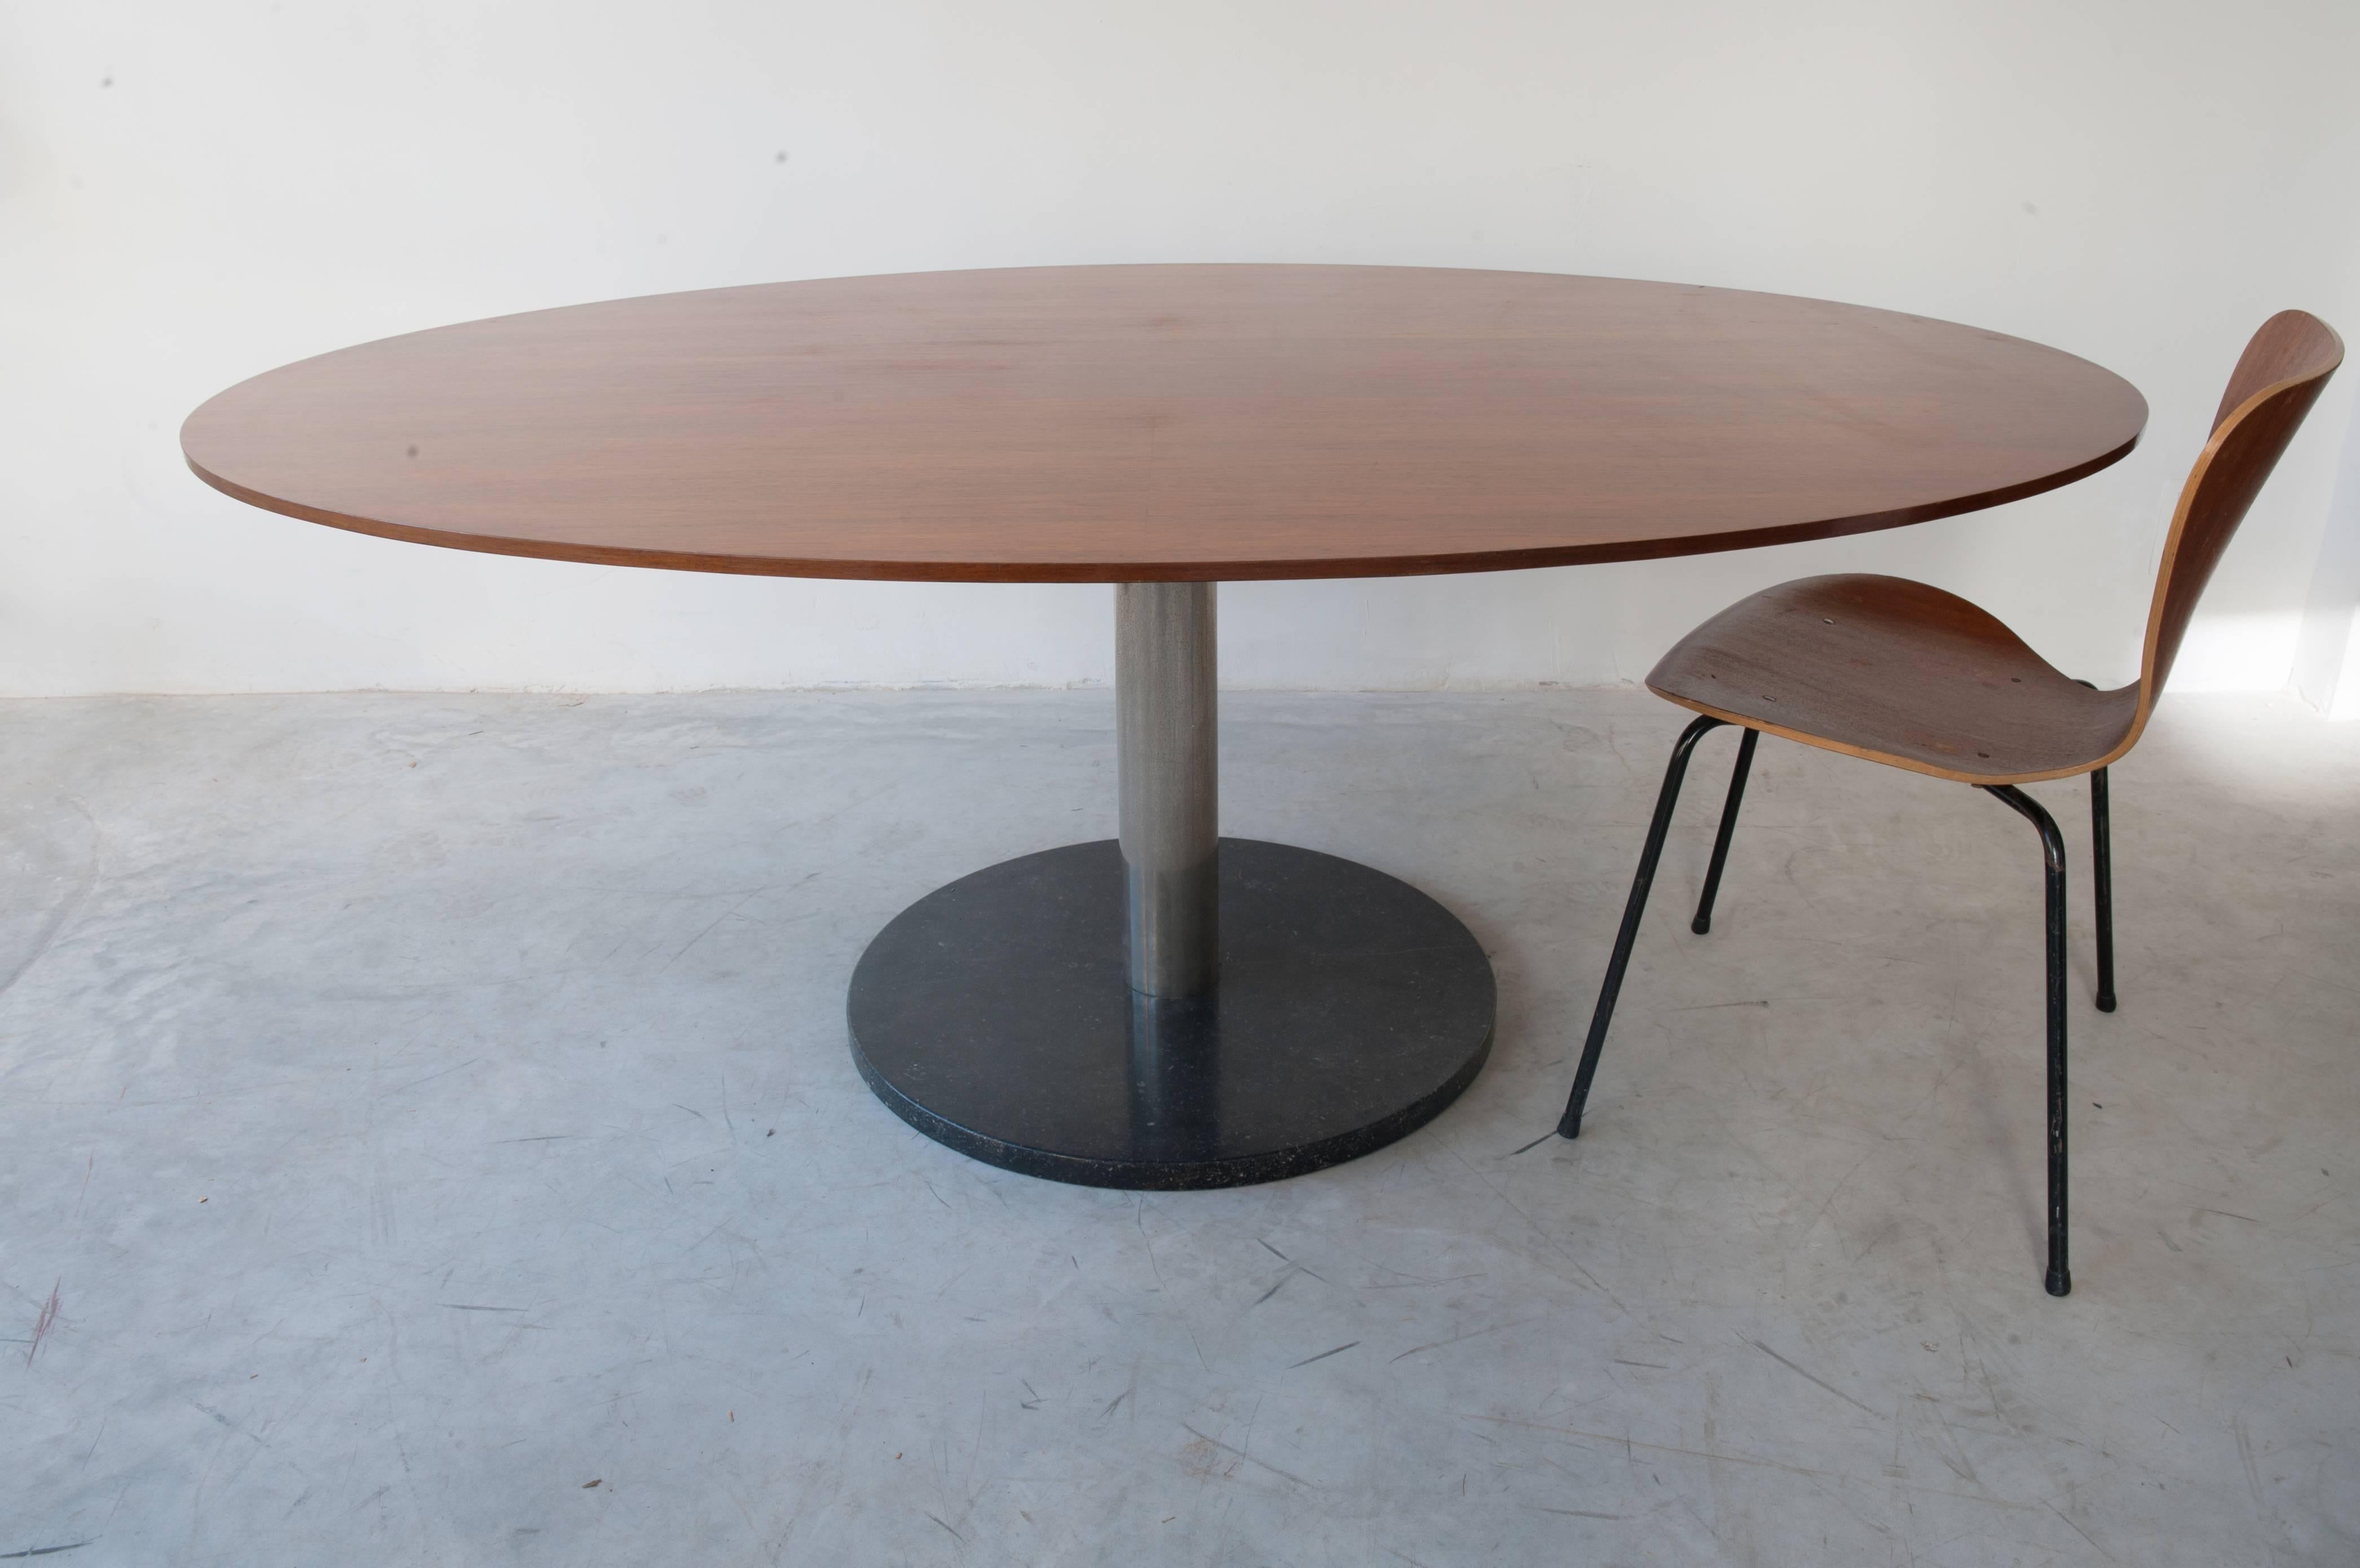 Mid-Century Modern Alfred Hendrickx Oval Shaped Walnut Dining Table, Belgium Design, 1962